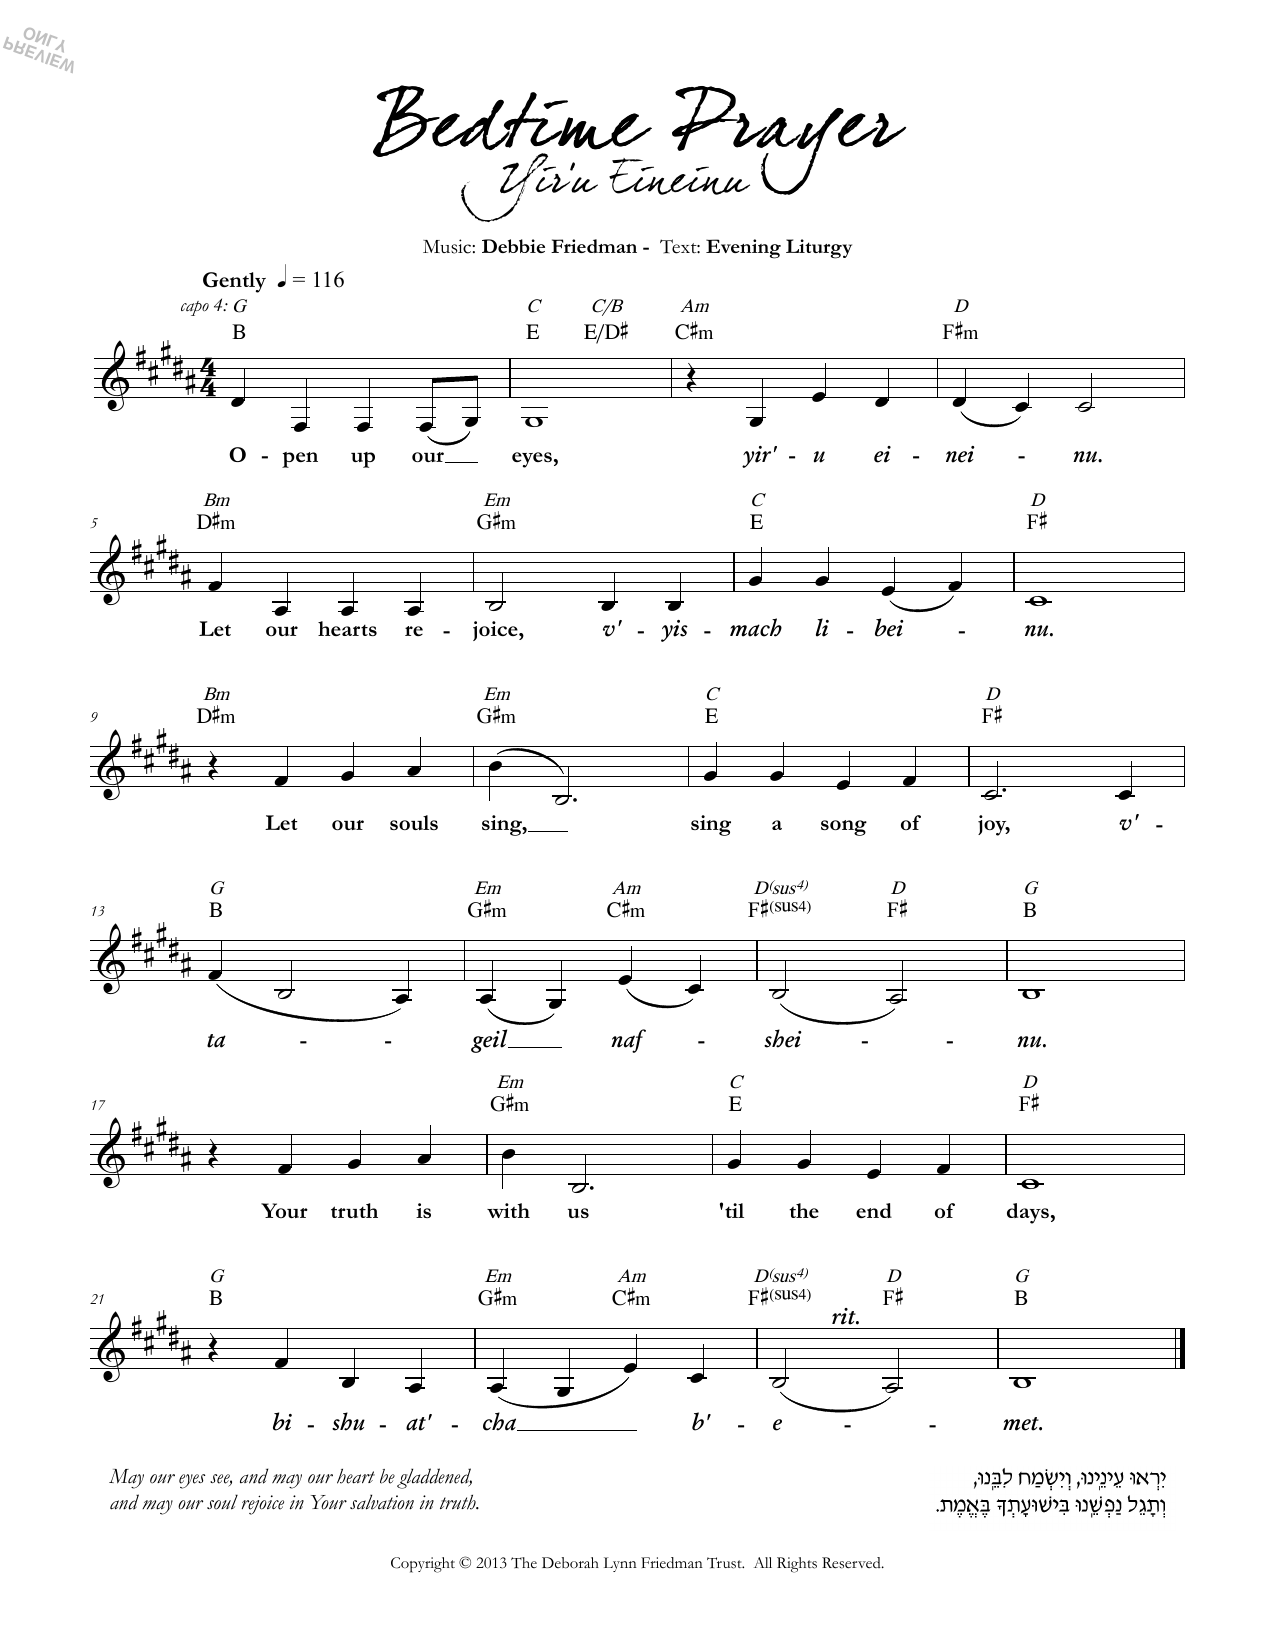 Download Debbie Friedman Bedtime Prayer (Yir'u Eineinu) Sheet Music and learn how to play Lead Sheet / Fake Book PDF digital score in minutes